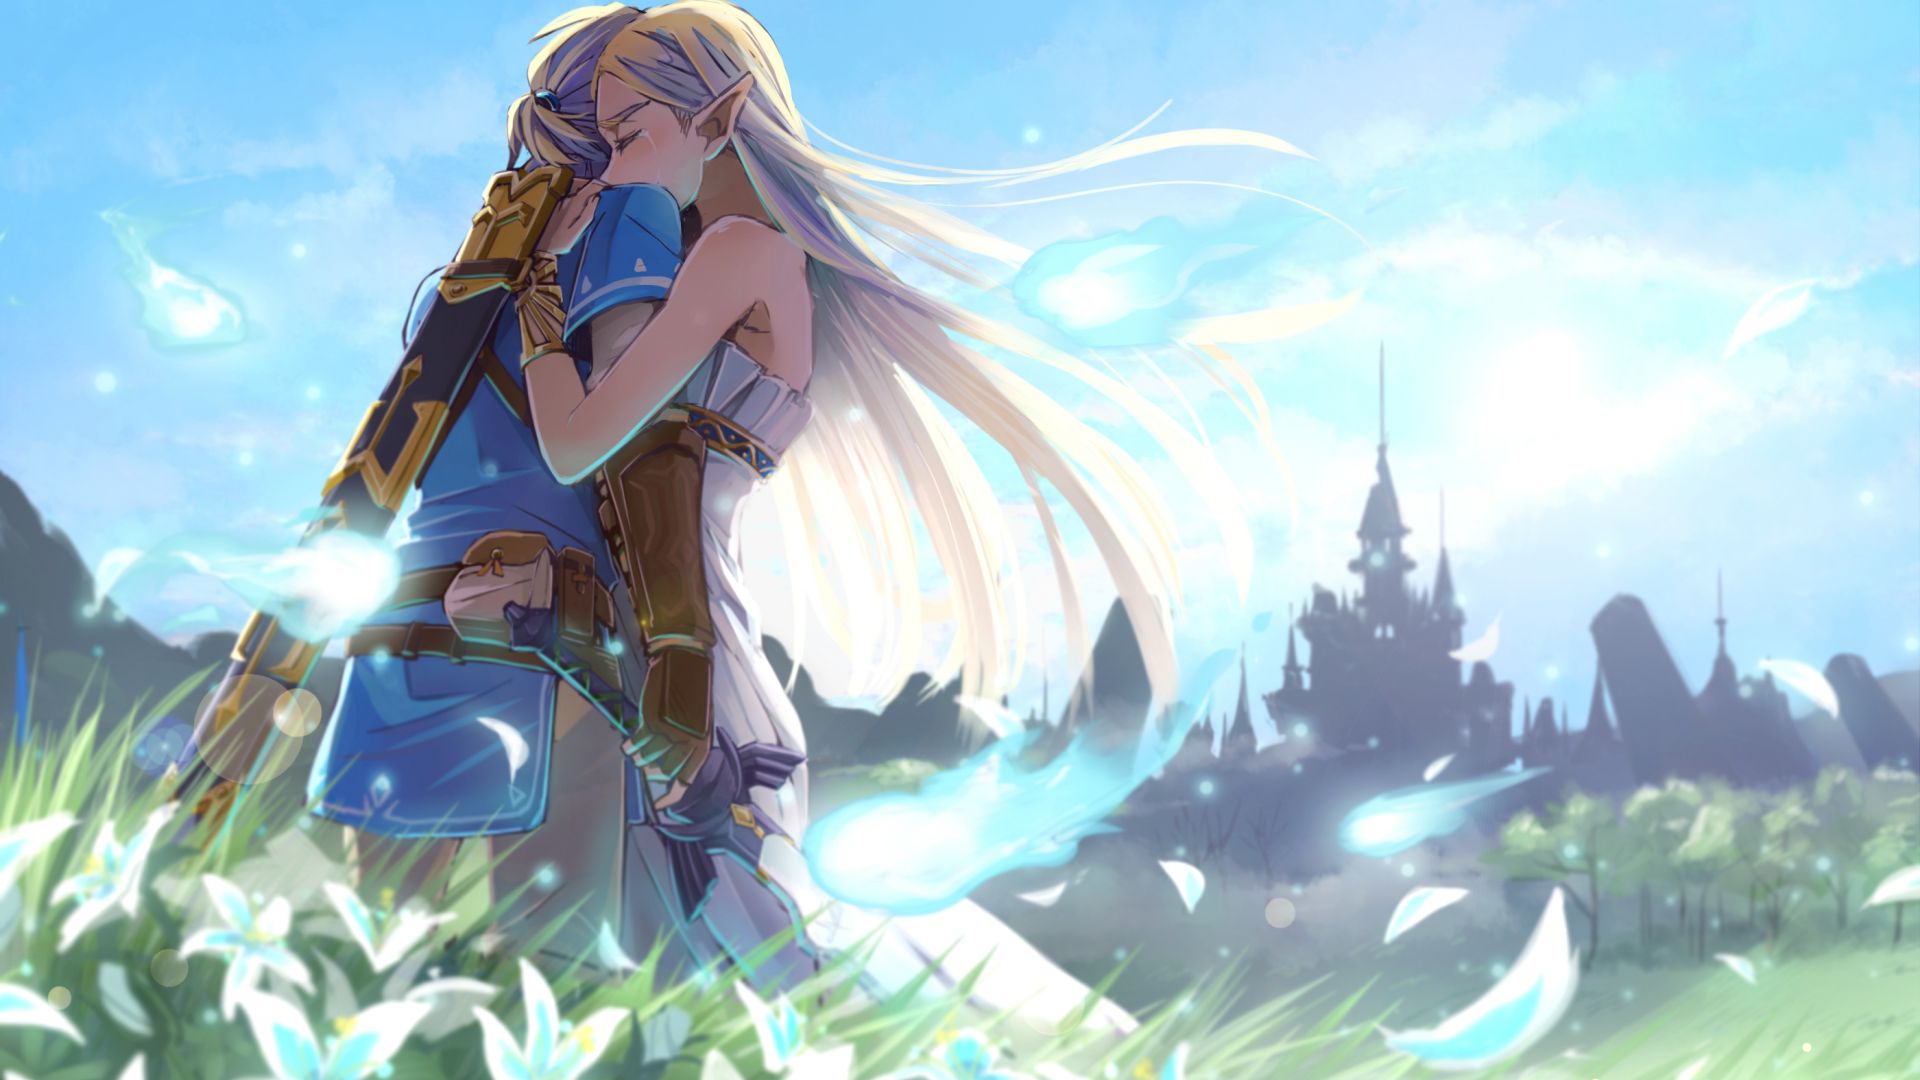 Wallpaper The legend of Zelda, Link, romance, love, artwork